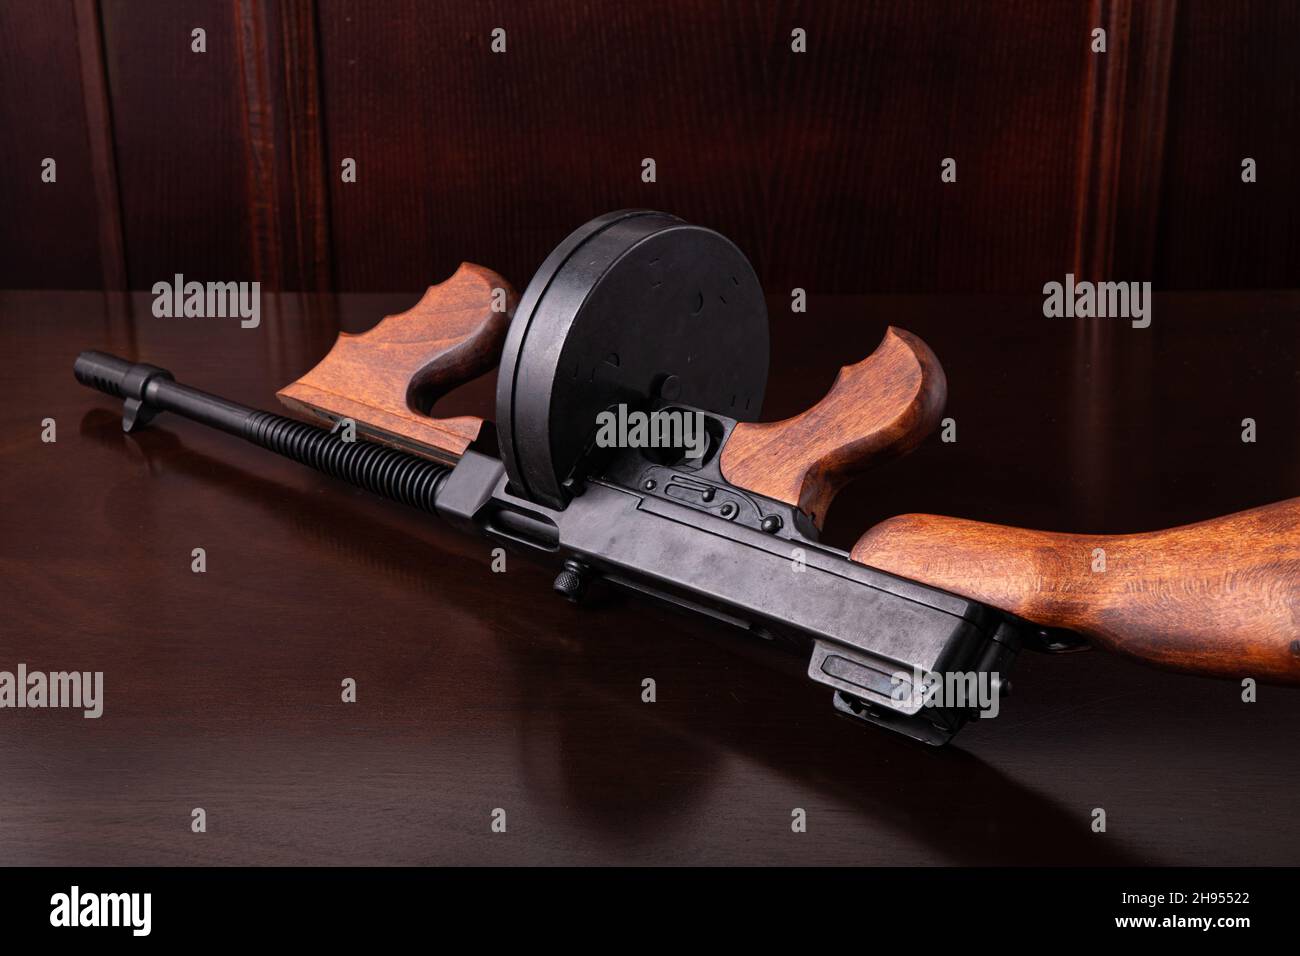 Thompson submachine gun on a dark table vintage style background photography Stock Photo